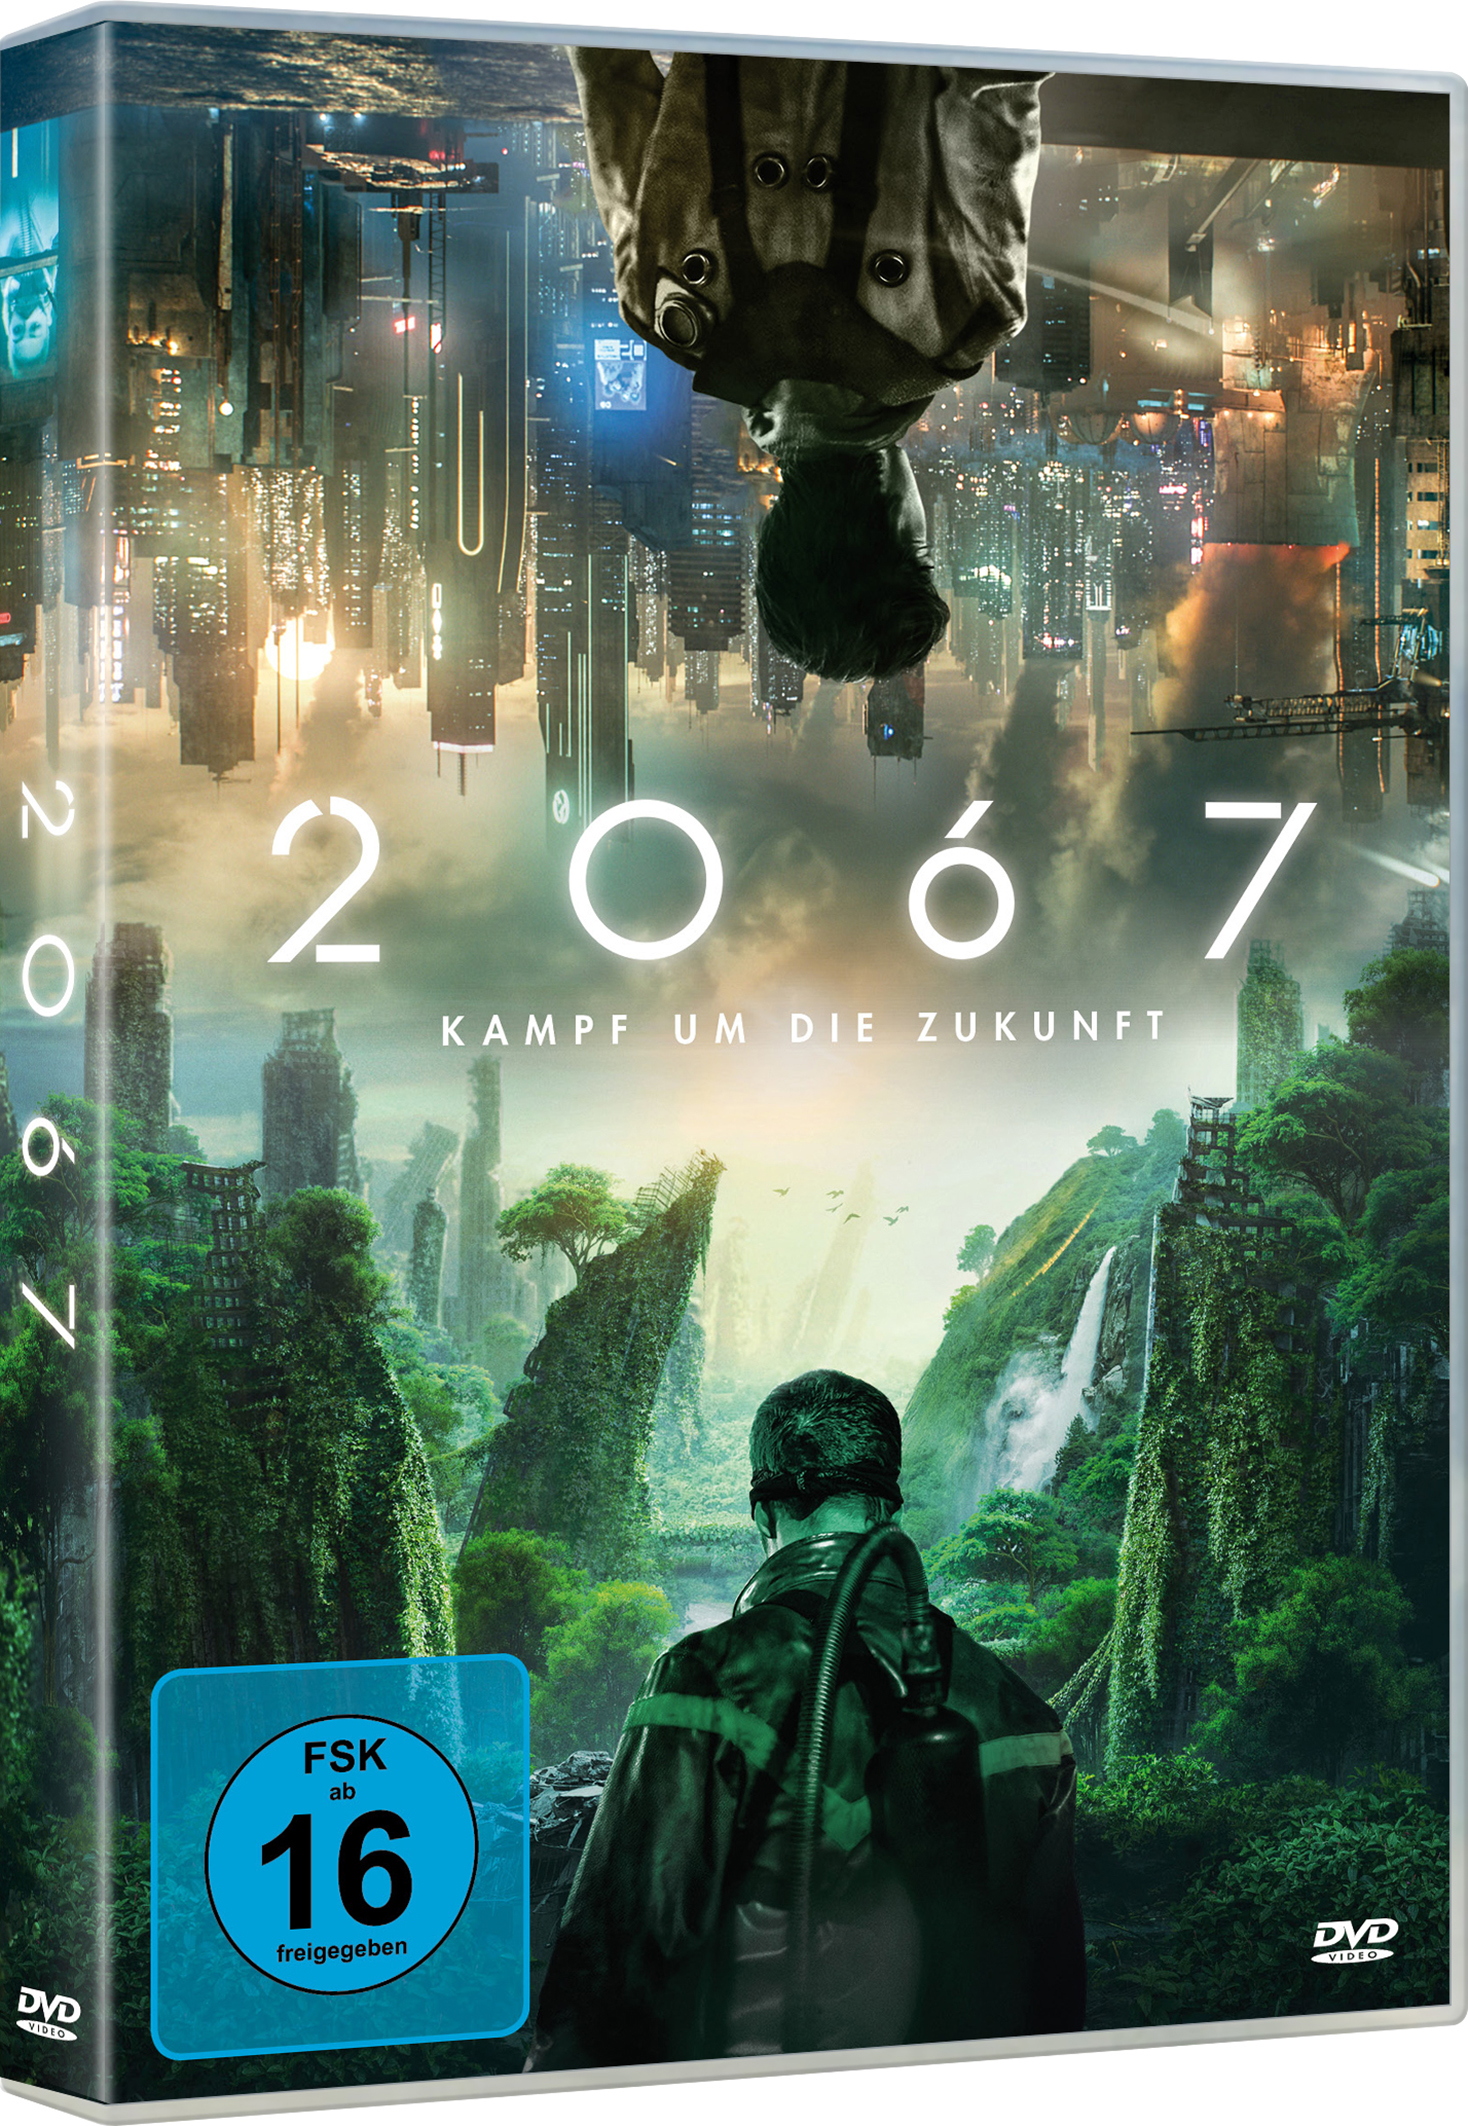 2067 (DVD)  Image 2